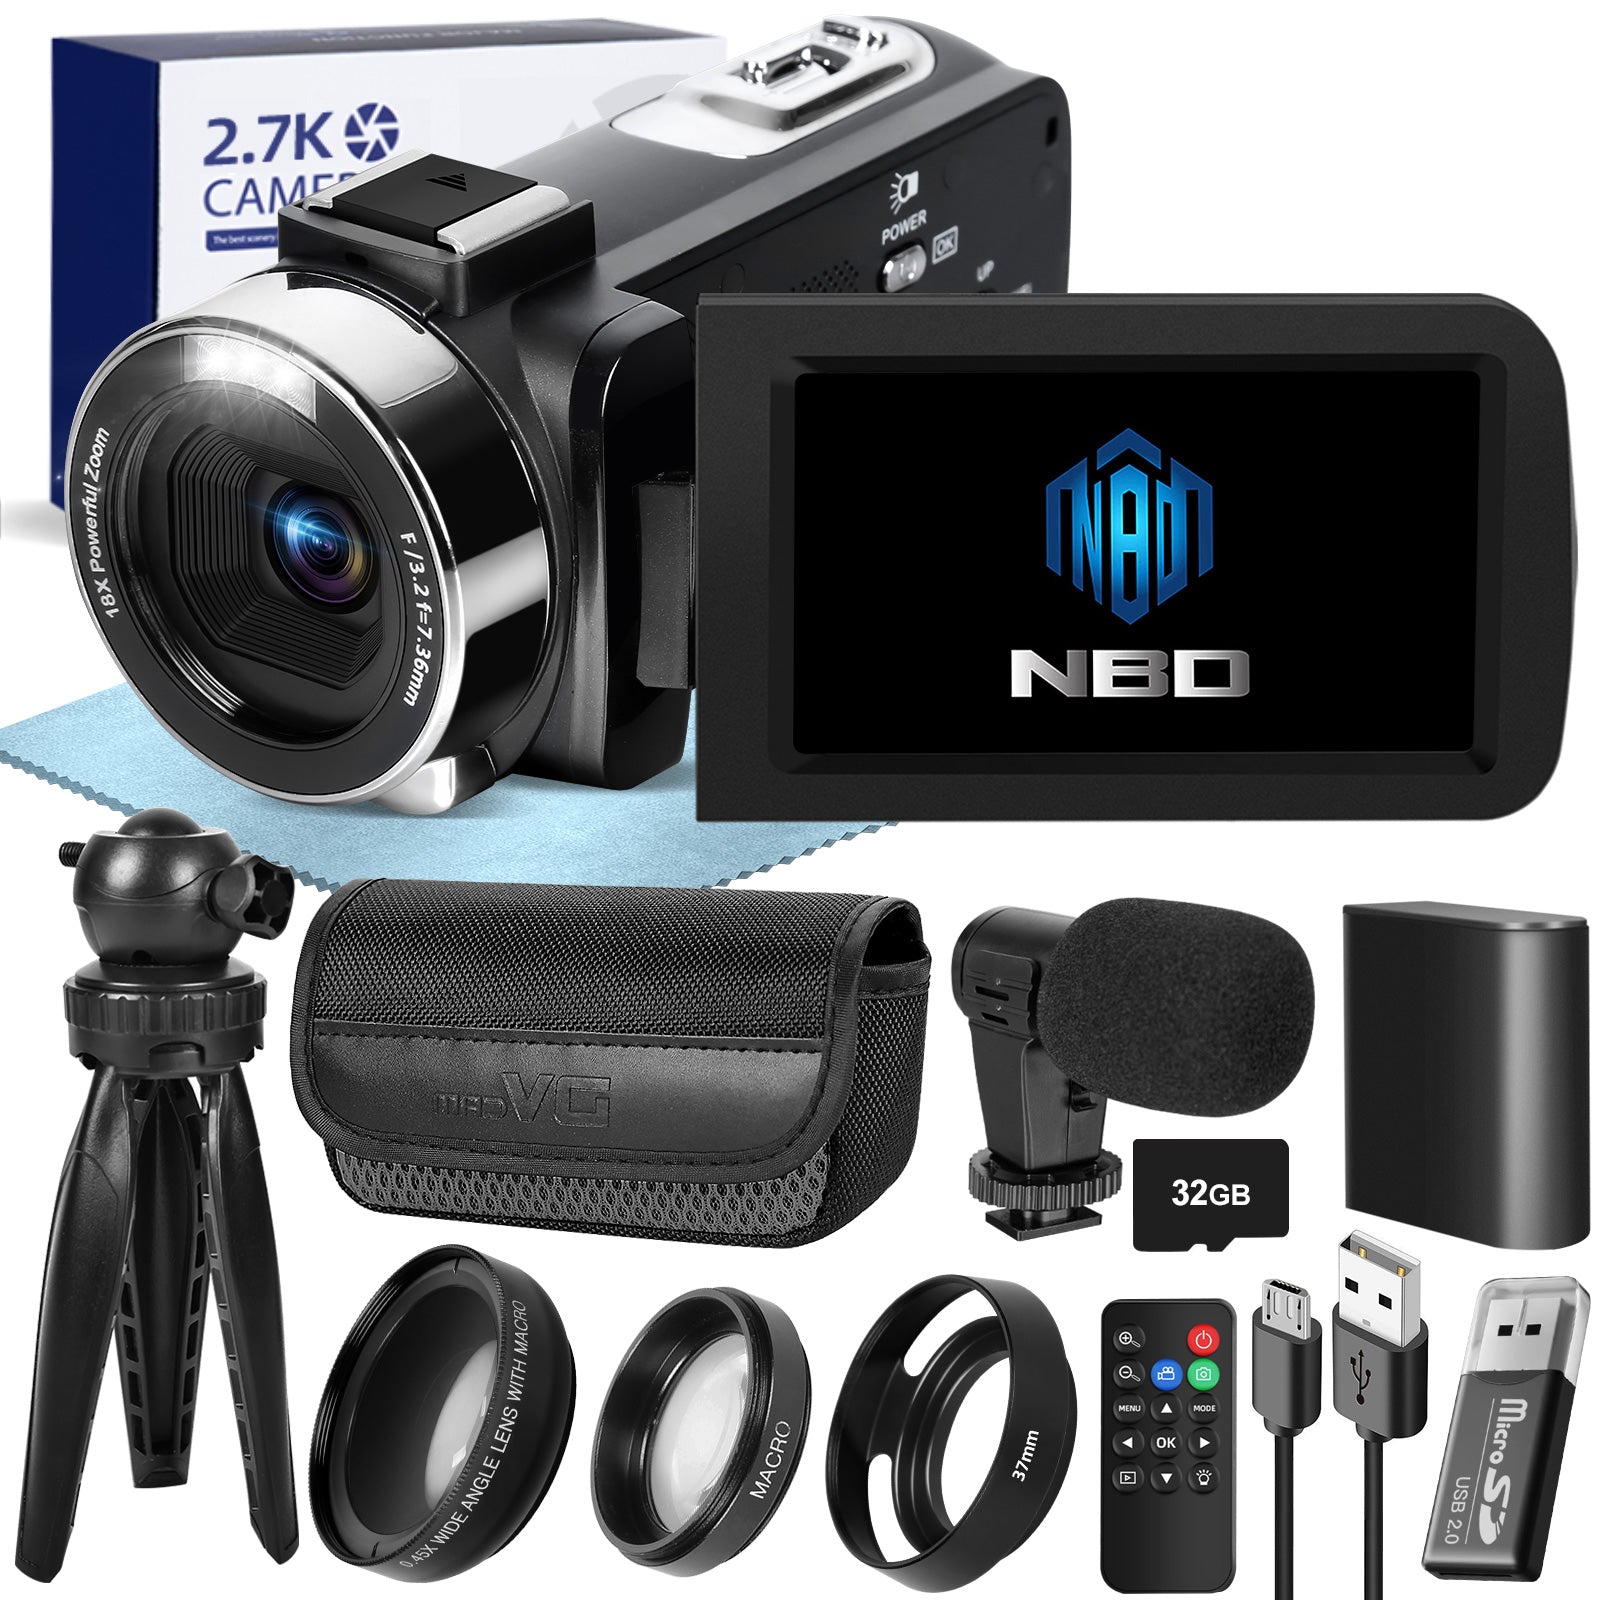 NBD 2.7K YouTube Vlogging Camera - 3.0" IPS Screen, 42MP Digital Recorder, 18X Digital Zoom (32GB SD Card Included)